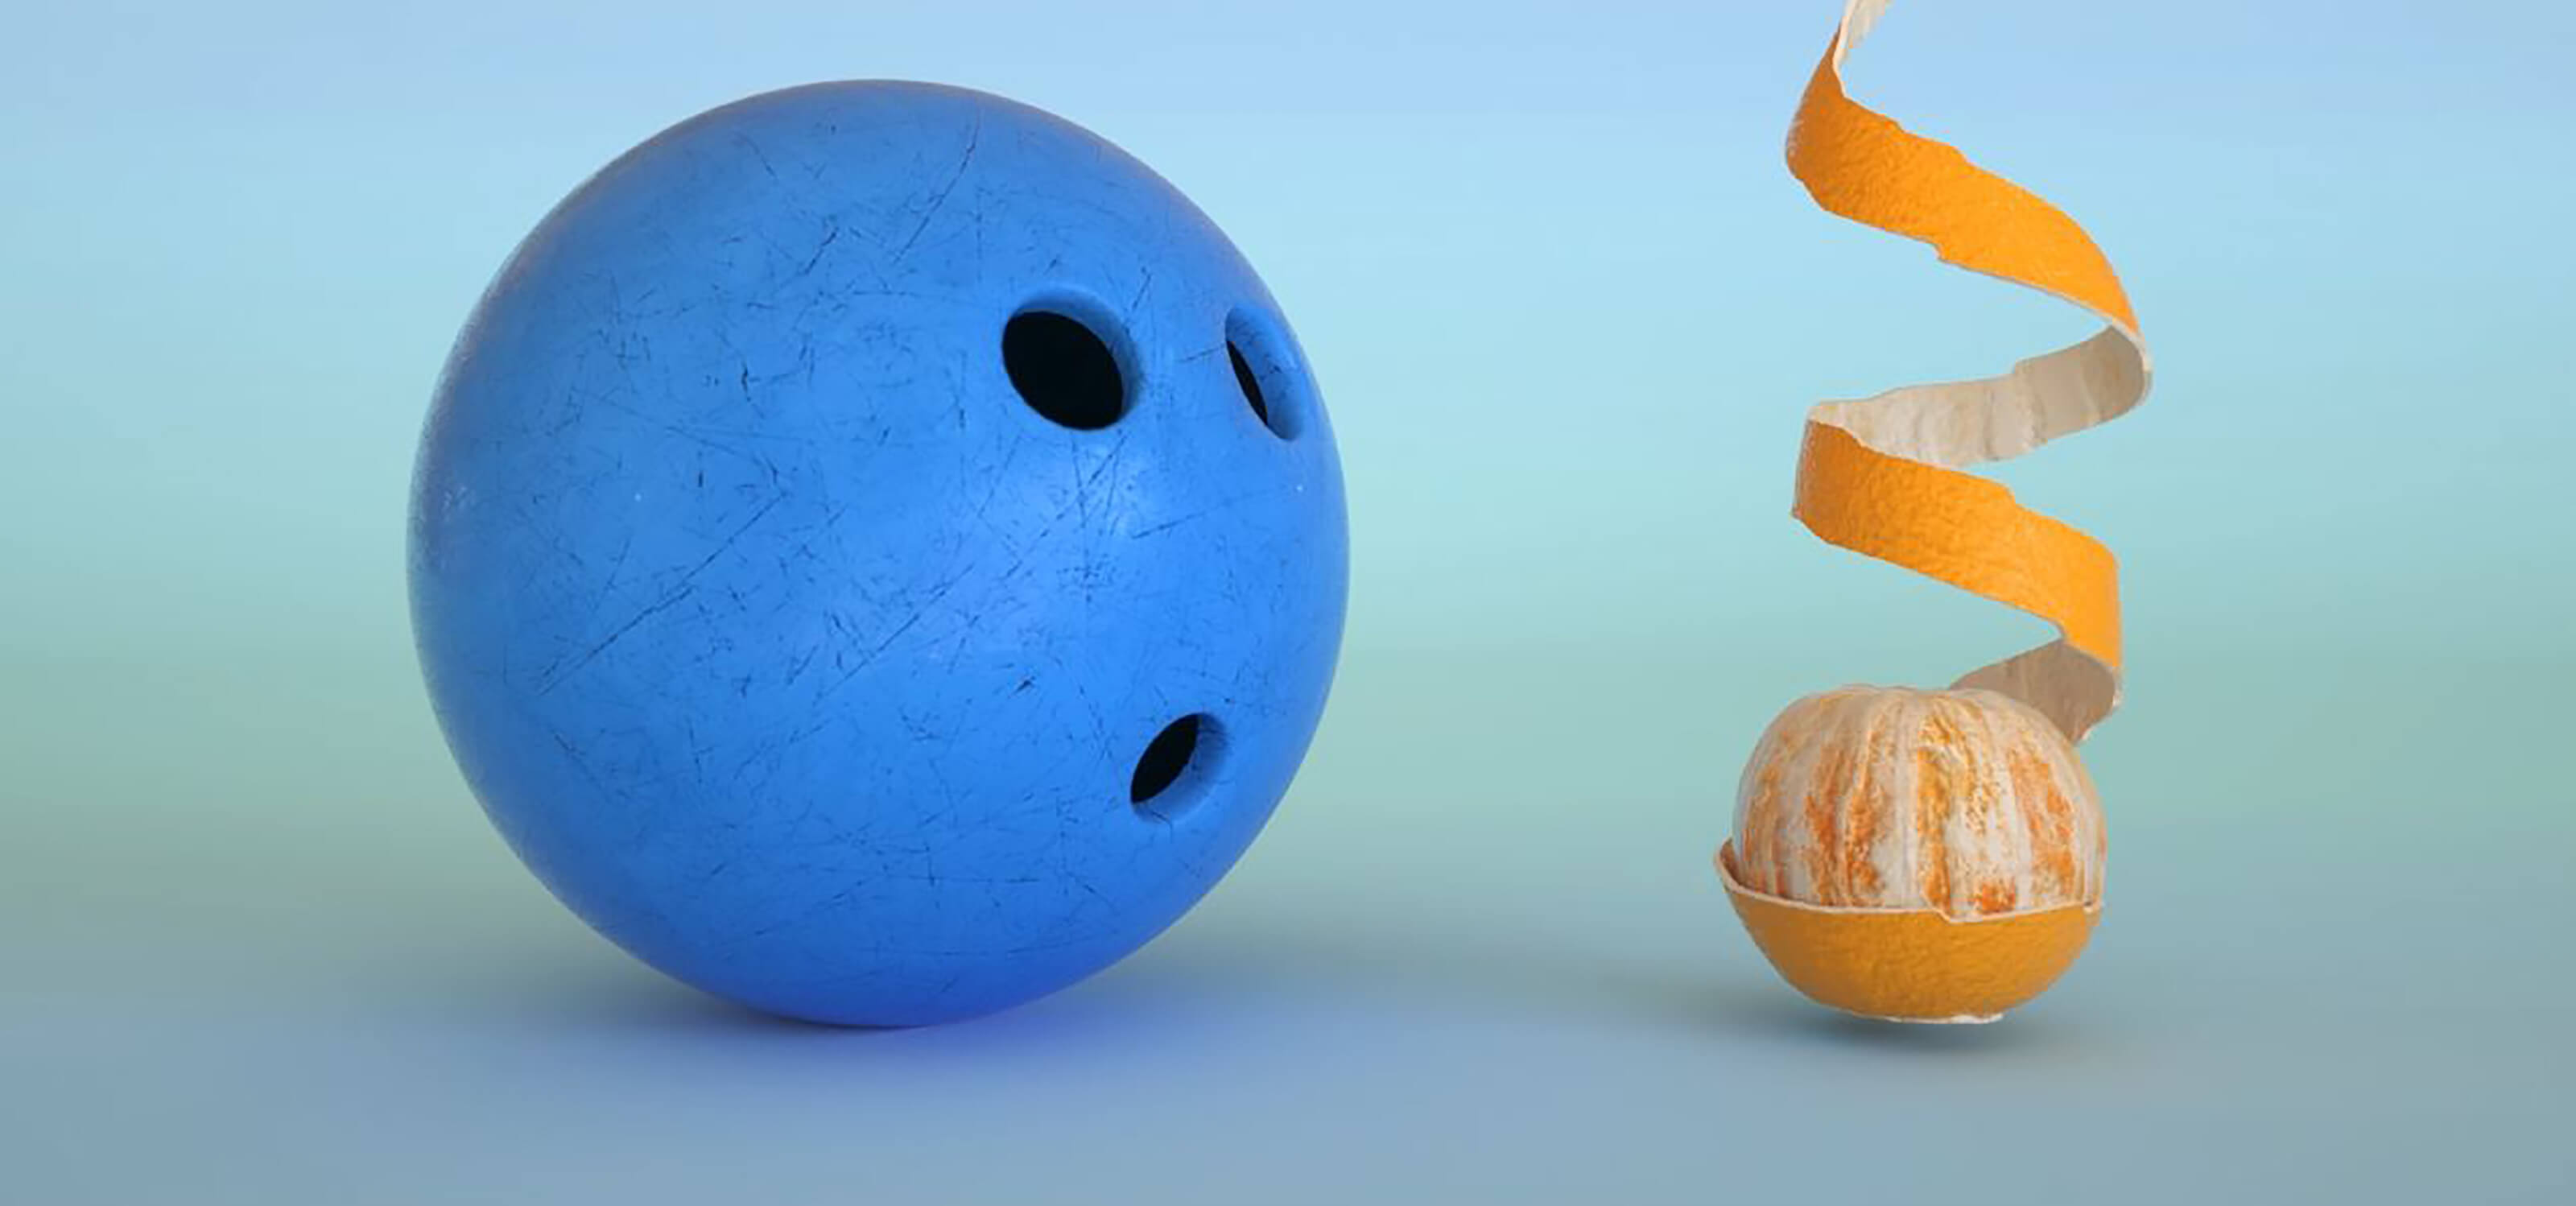 CG image of a bowling ball and peeled orange by Jonathan Bourim and Christophe Bouchard.